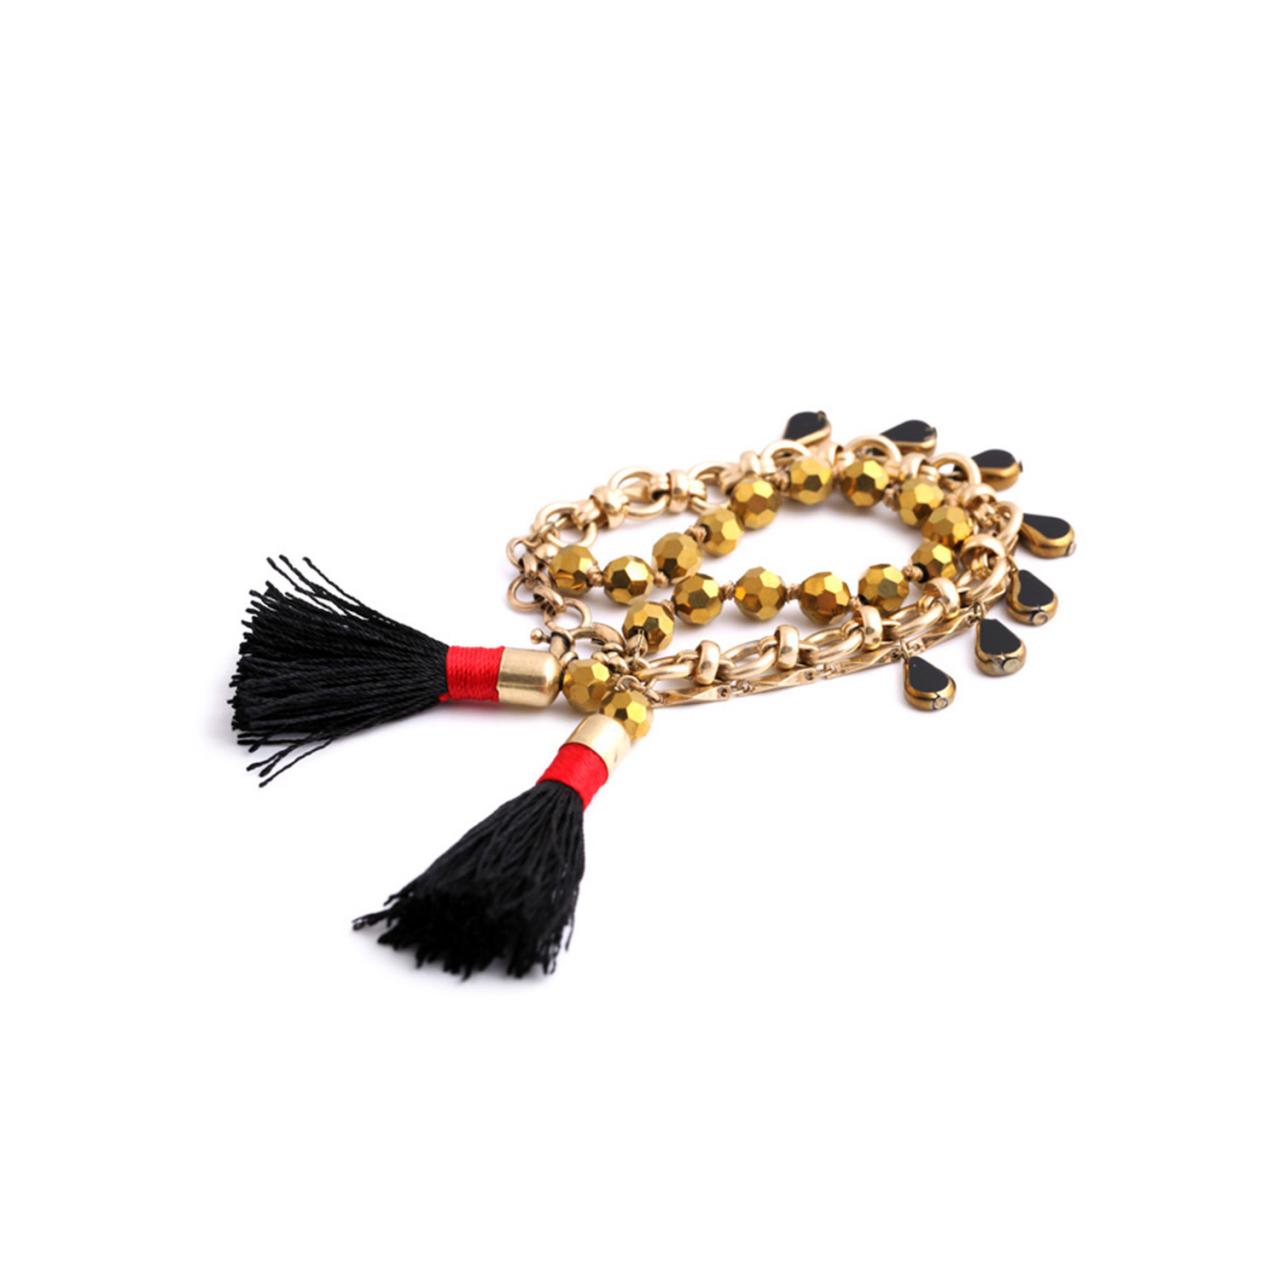 Tassel Bracelet / Chain Bracelet / Bead Bracelet / Gold Jewelry / Layered Bracelet / Black Tassel / Tribal Bracelet / Boho Jewelry / Gold